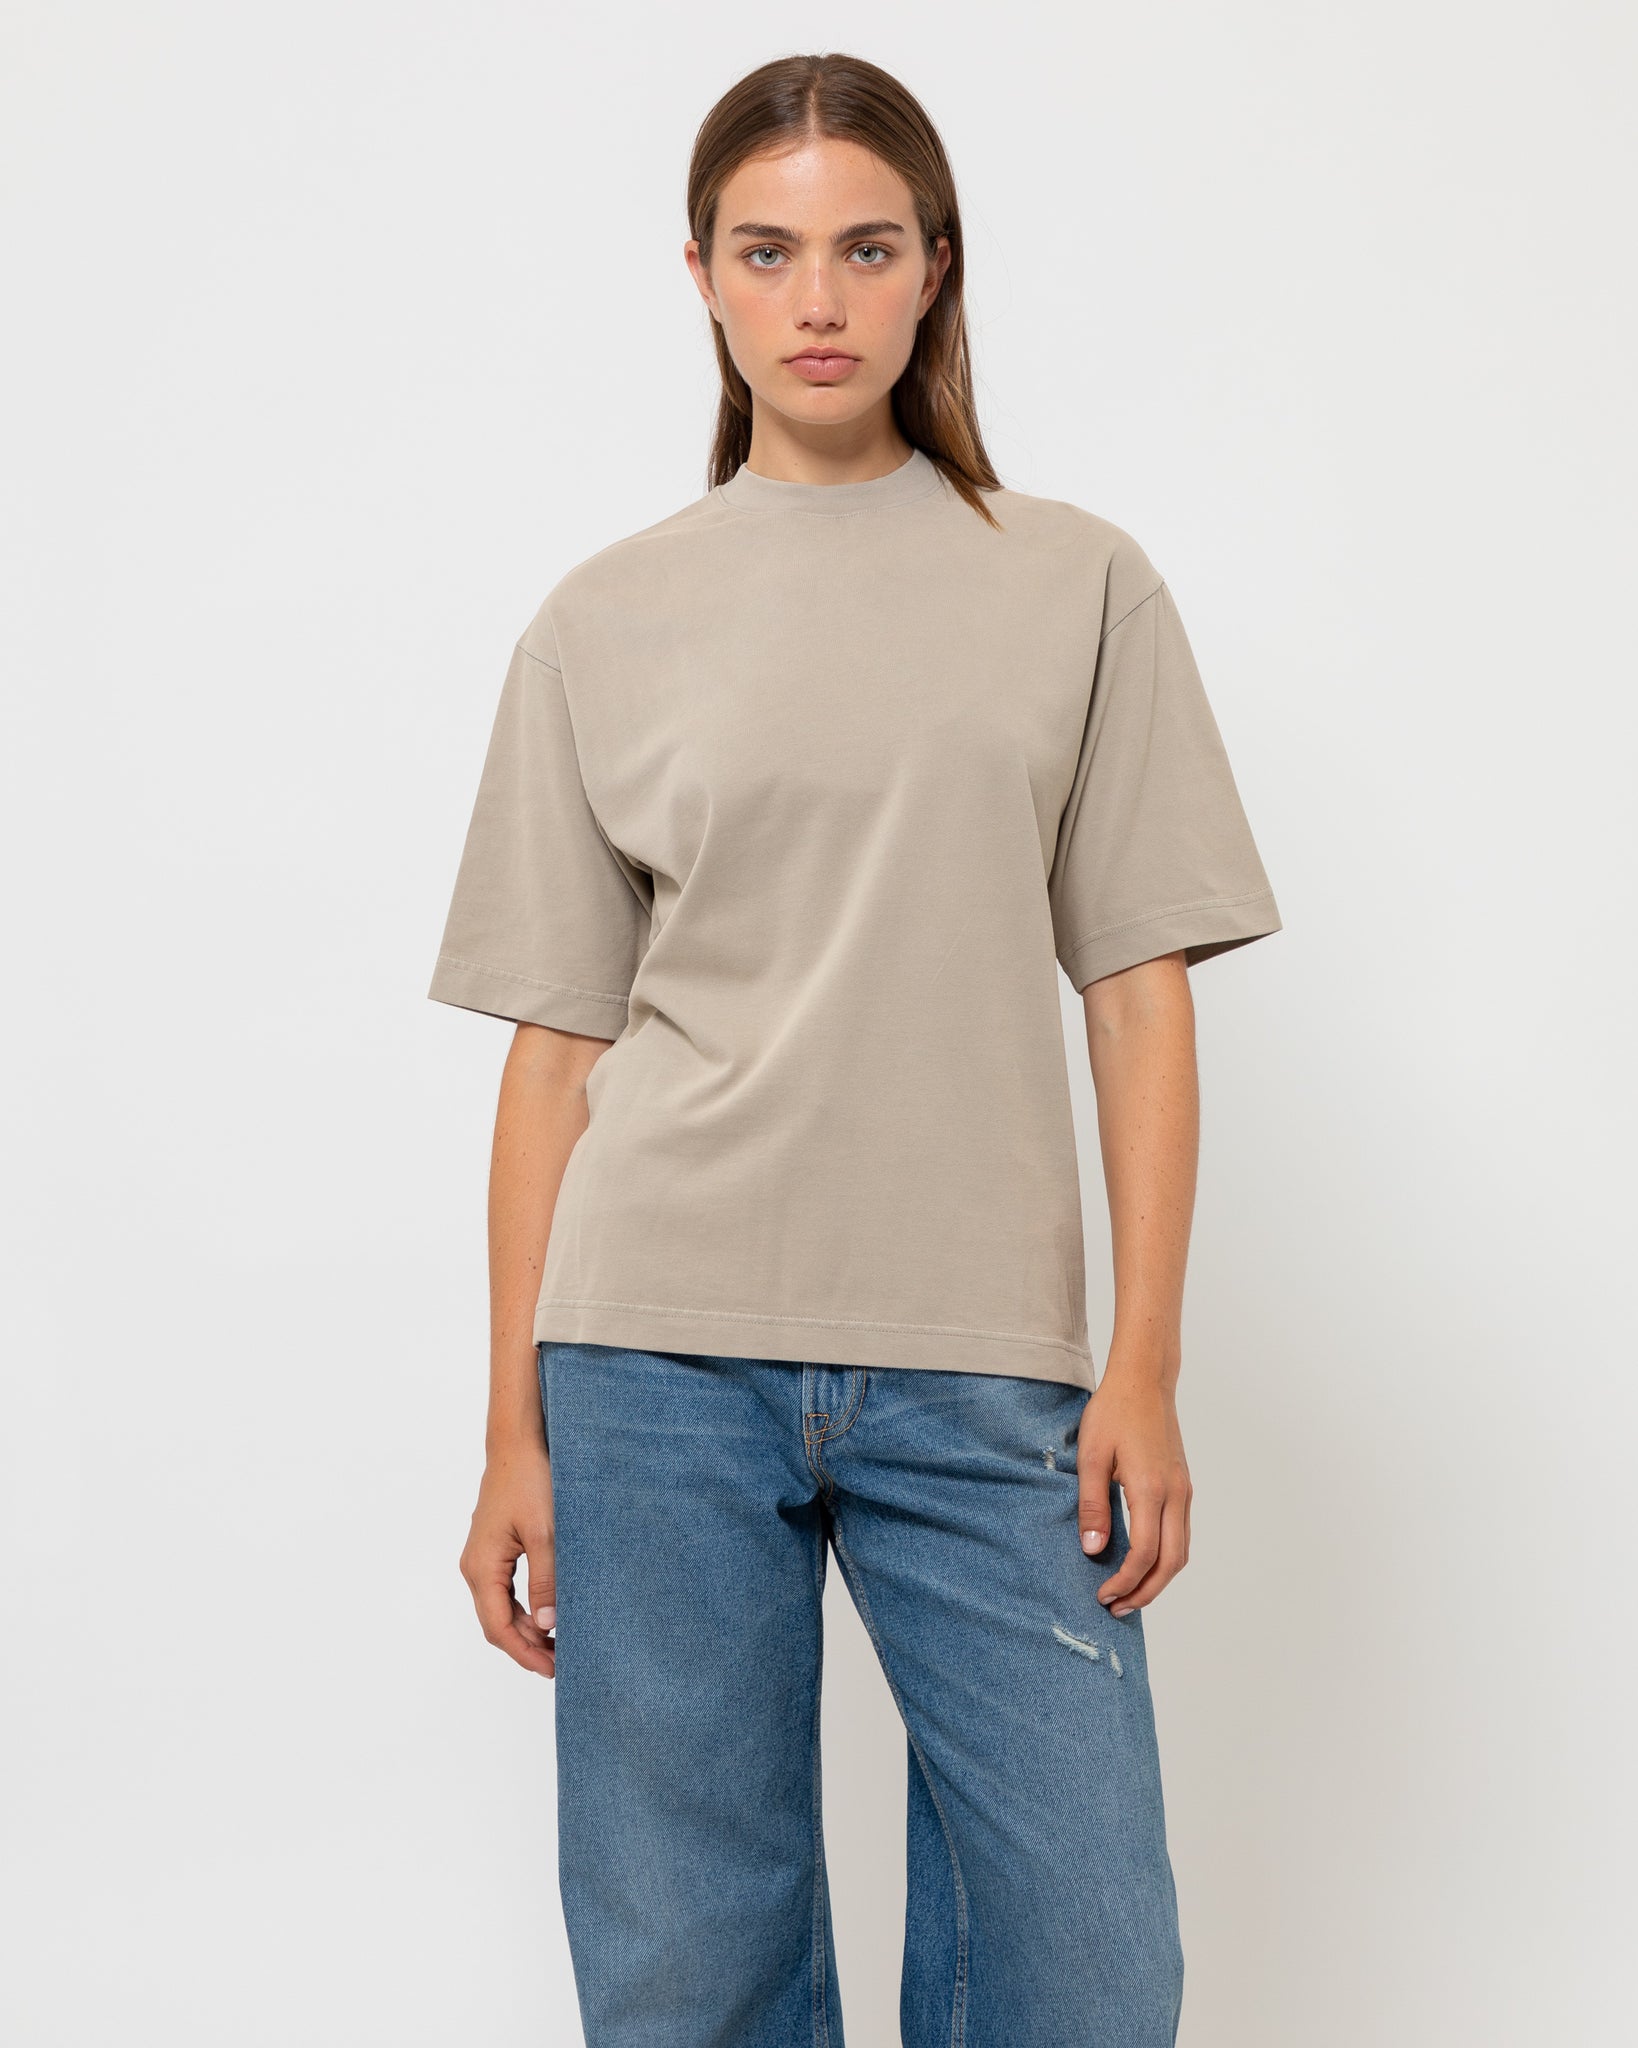 Concrete Grey T-Shirt